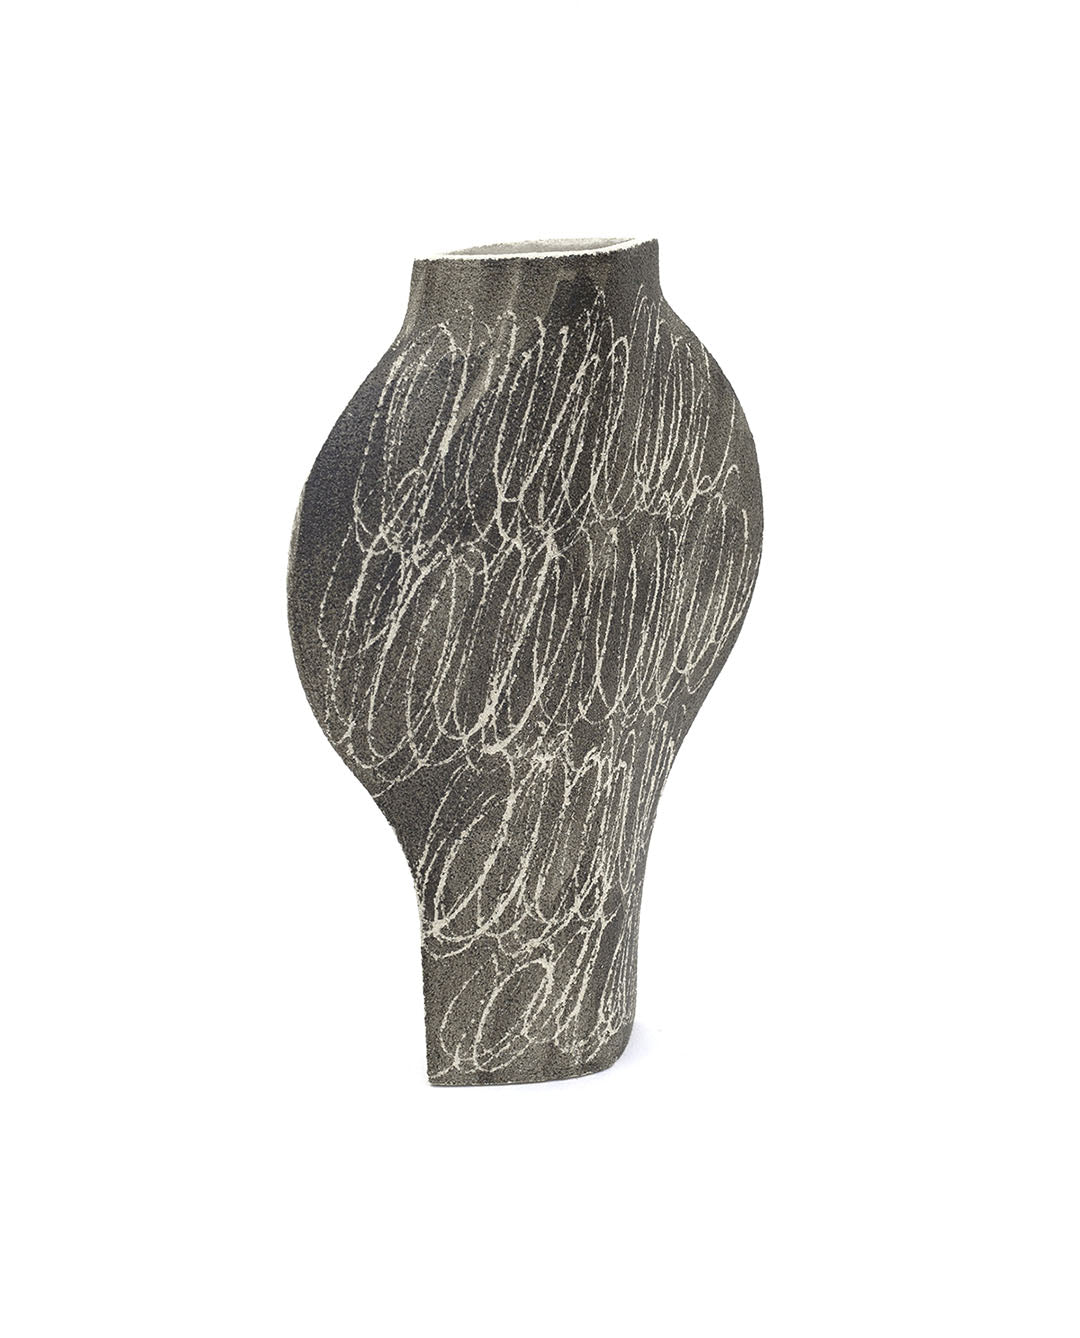 ‘Dal - Negative Circles Black’ Ceramic Illustrated Vase